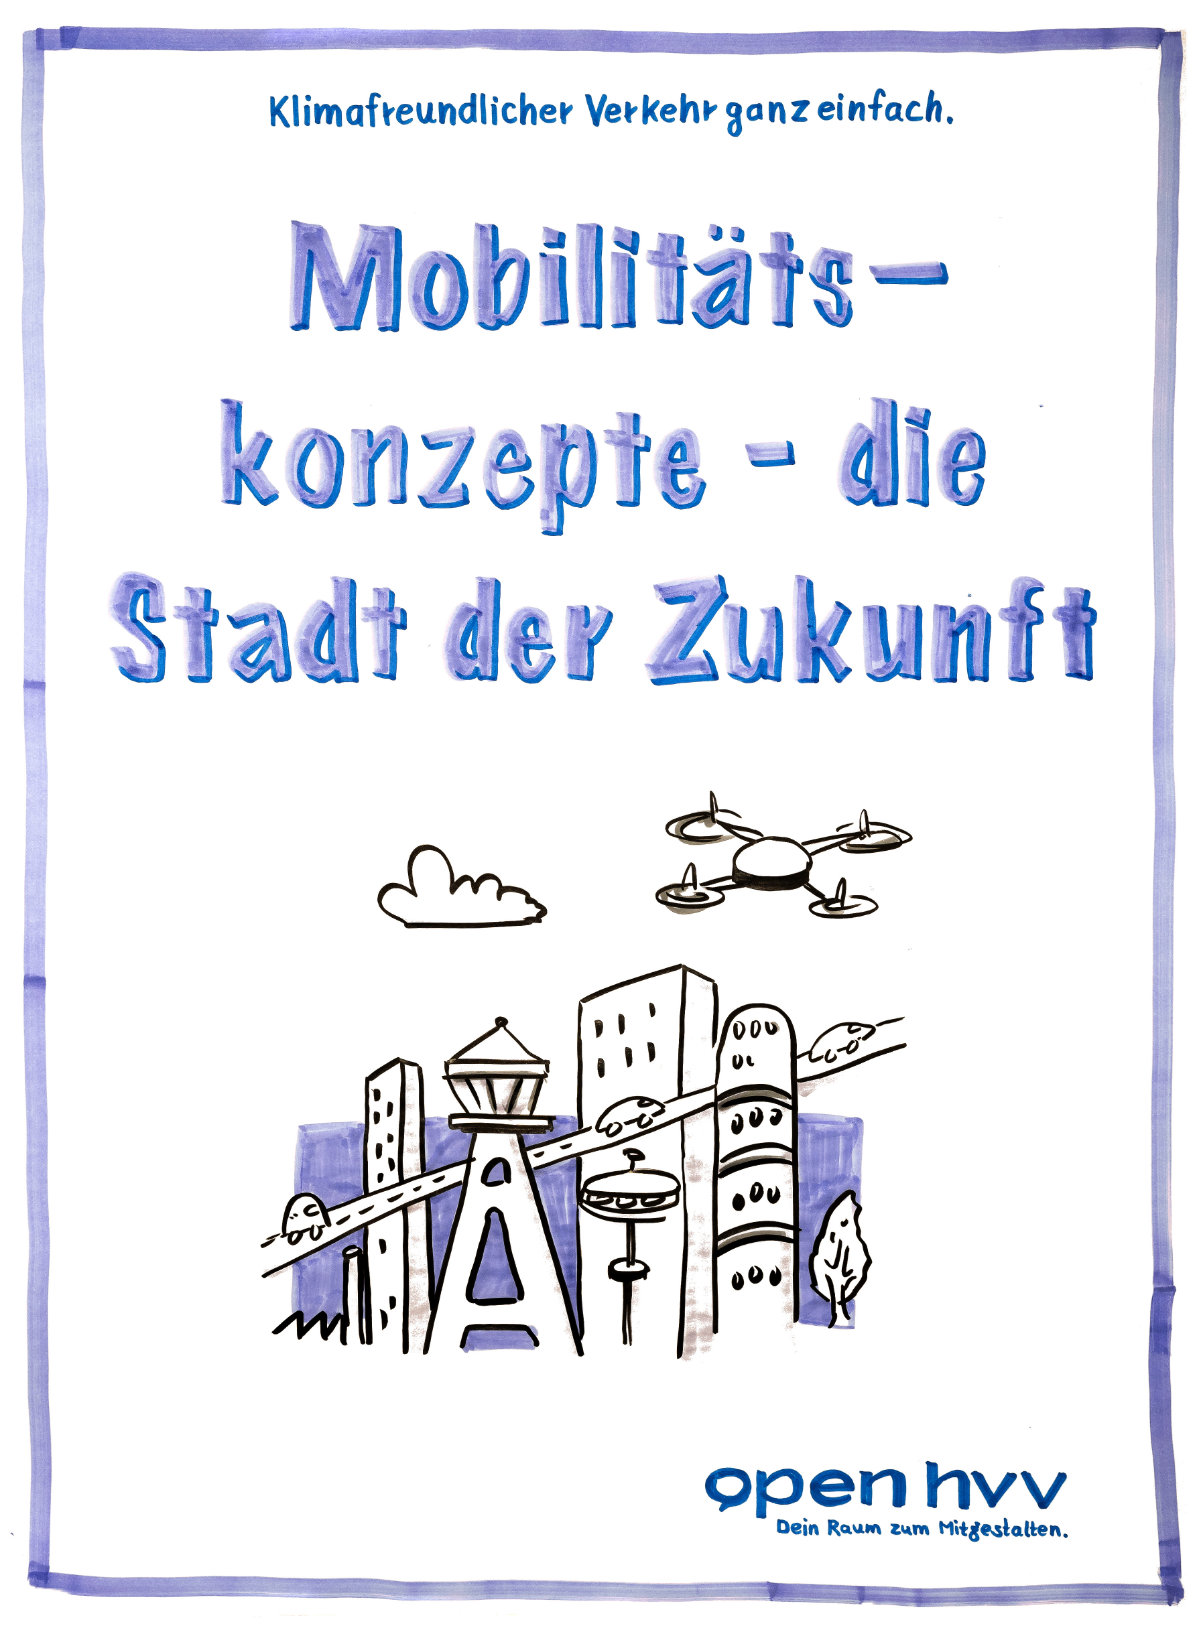 1_2022-09-26 - cvv 3 - Mobilitätskonzepte